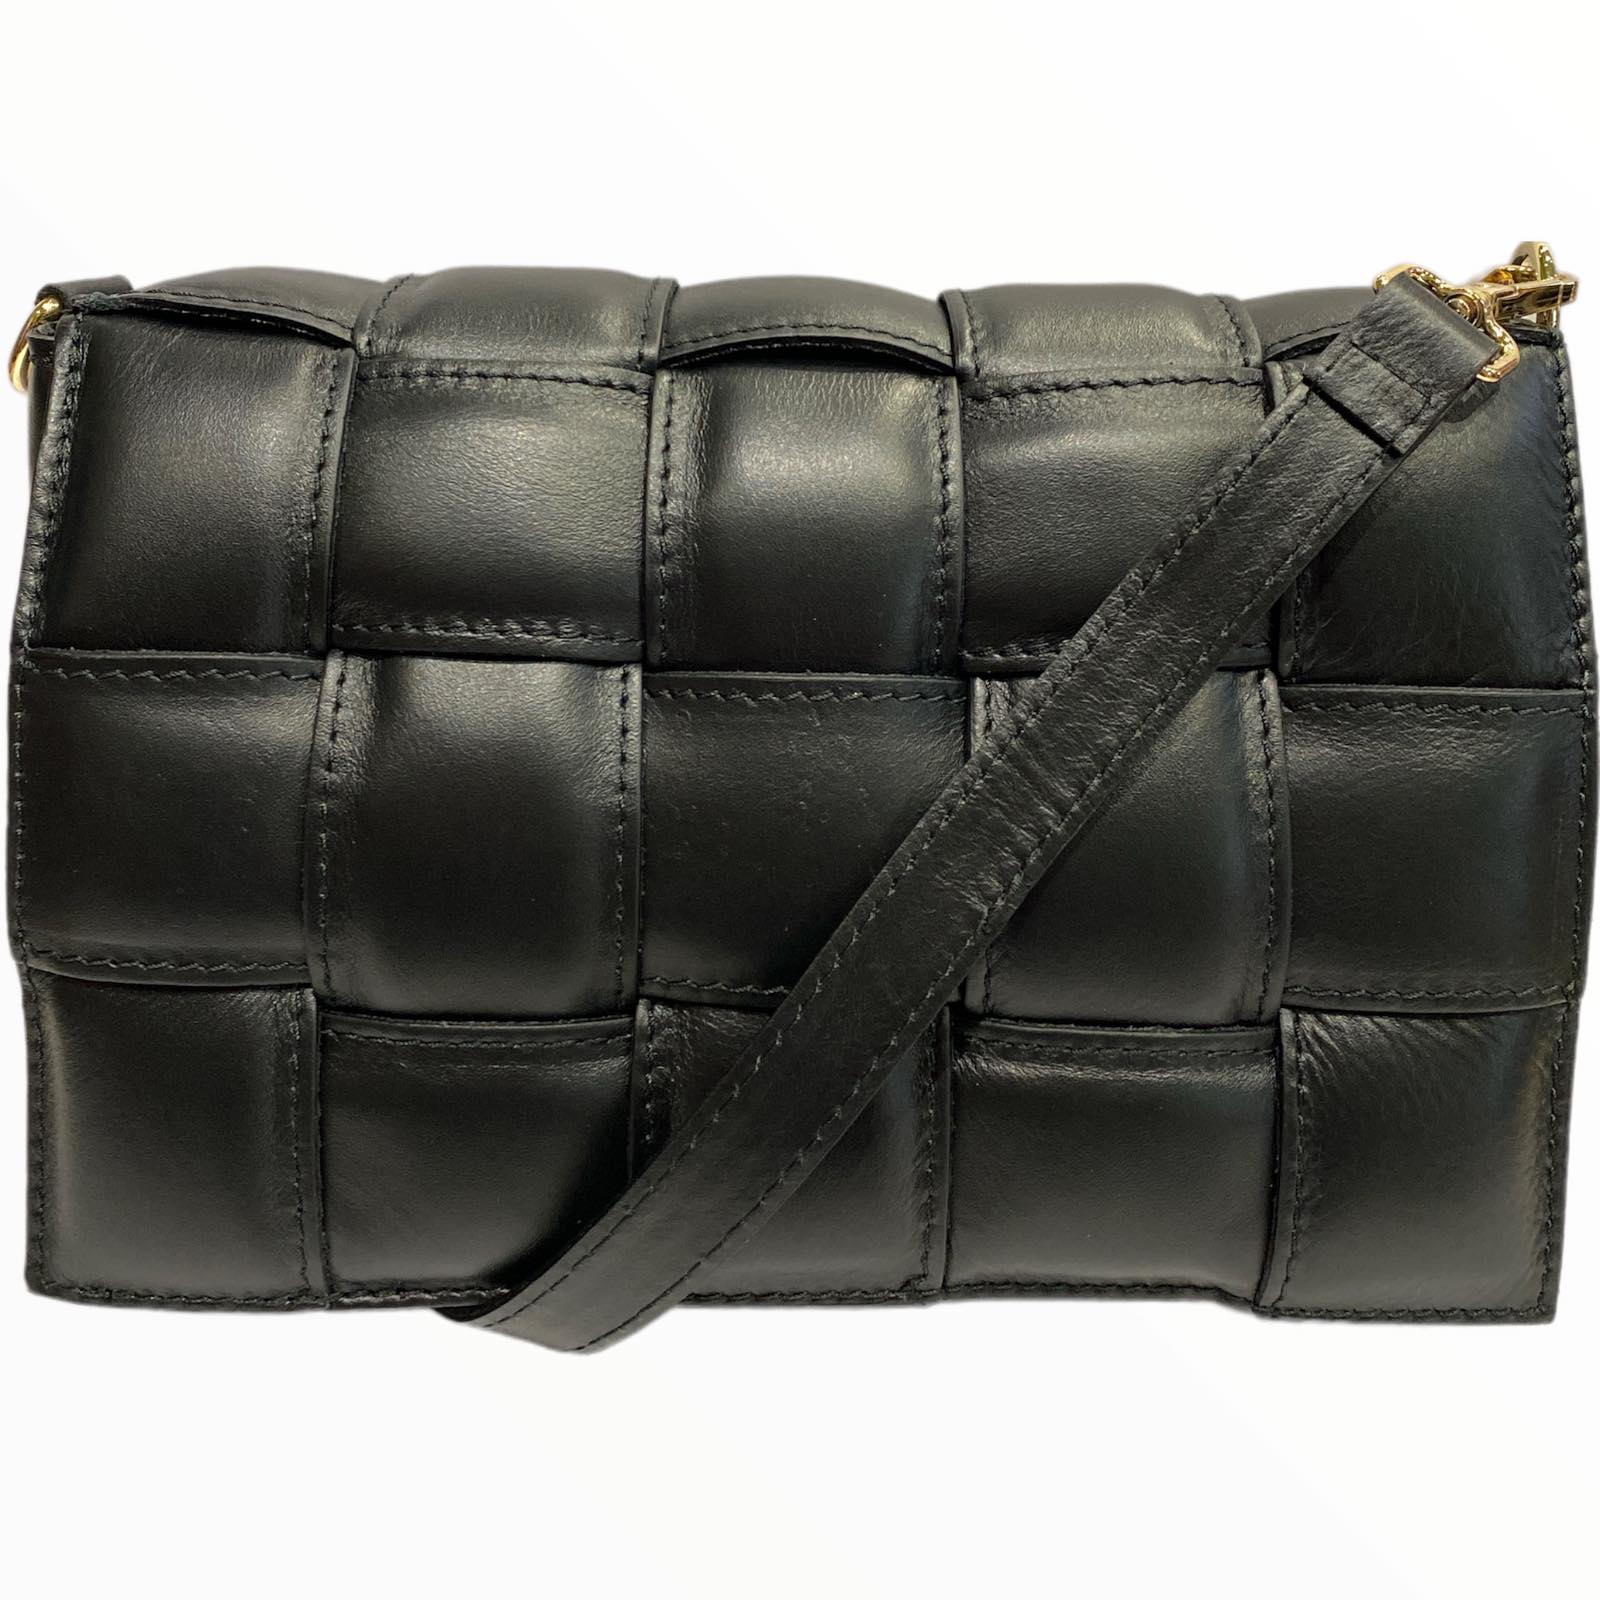 Black leather woven messenger bag